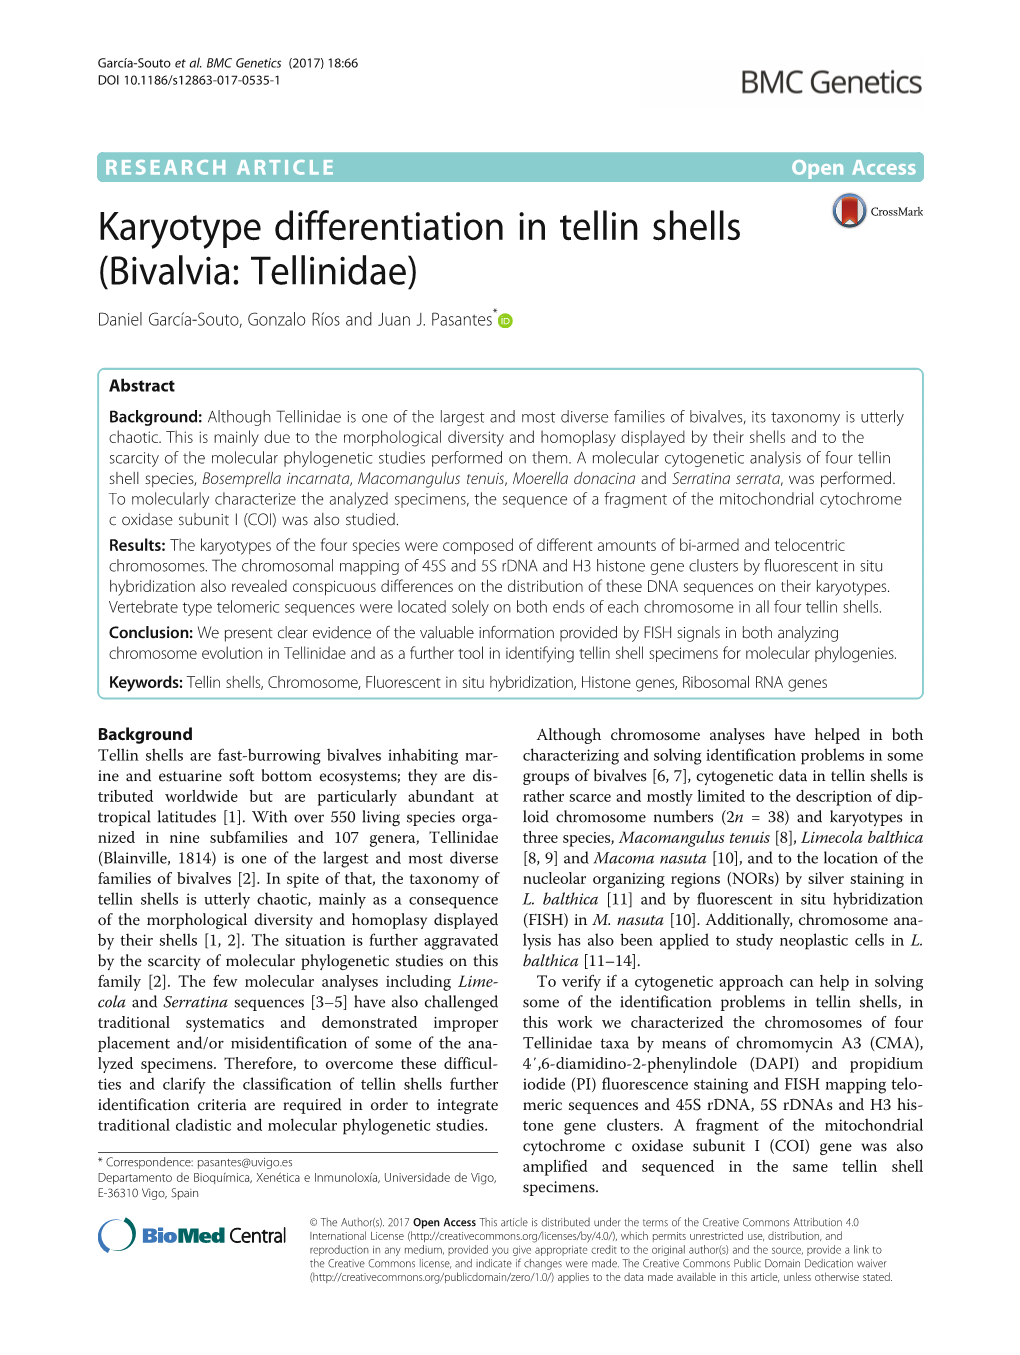 Karyotype Differentiation in Tellin Shells (Bivalvia: Tellinidae) Daniel García-Souto, Gonzalo Ríos and Juan J